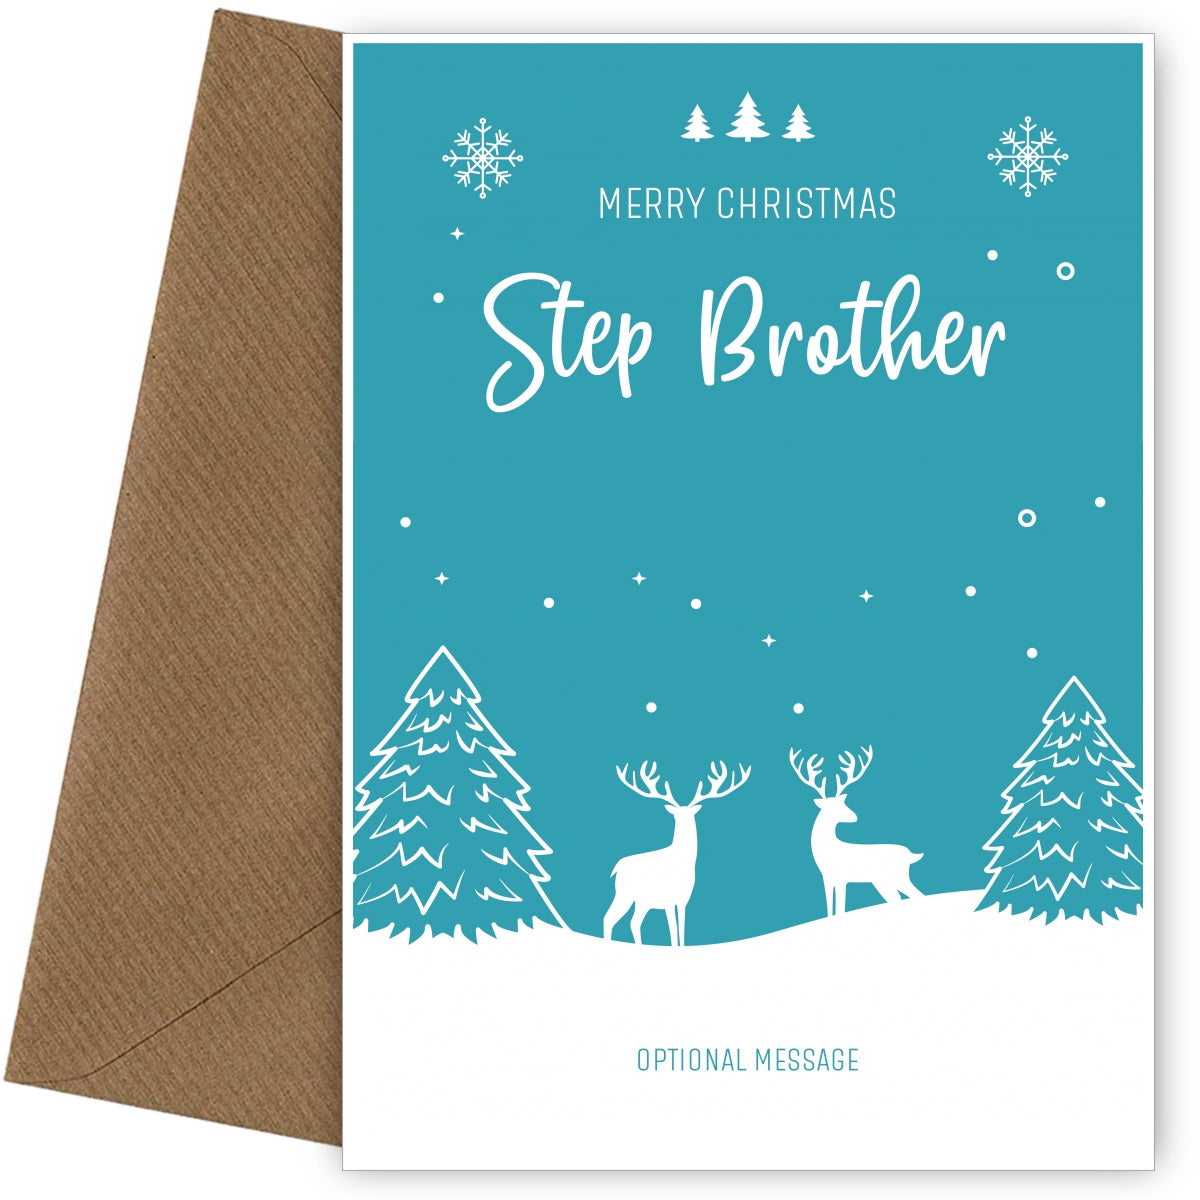 Step Brother Christmas Card - Reindeer Scene